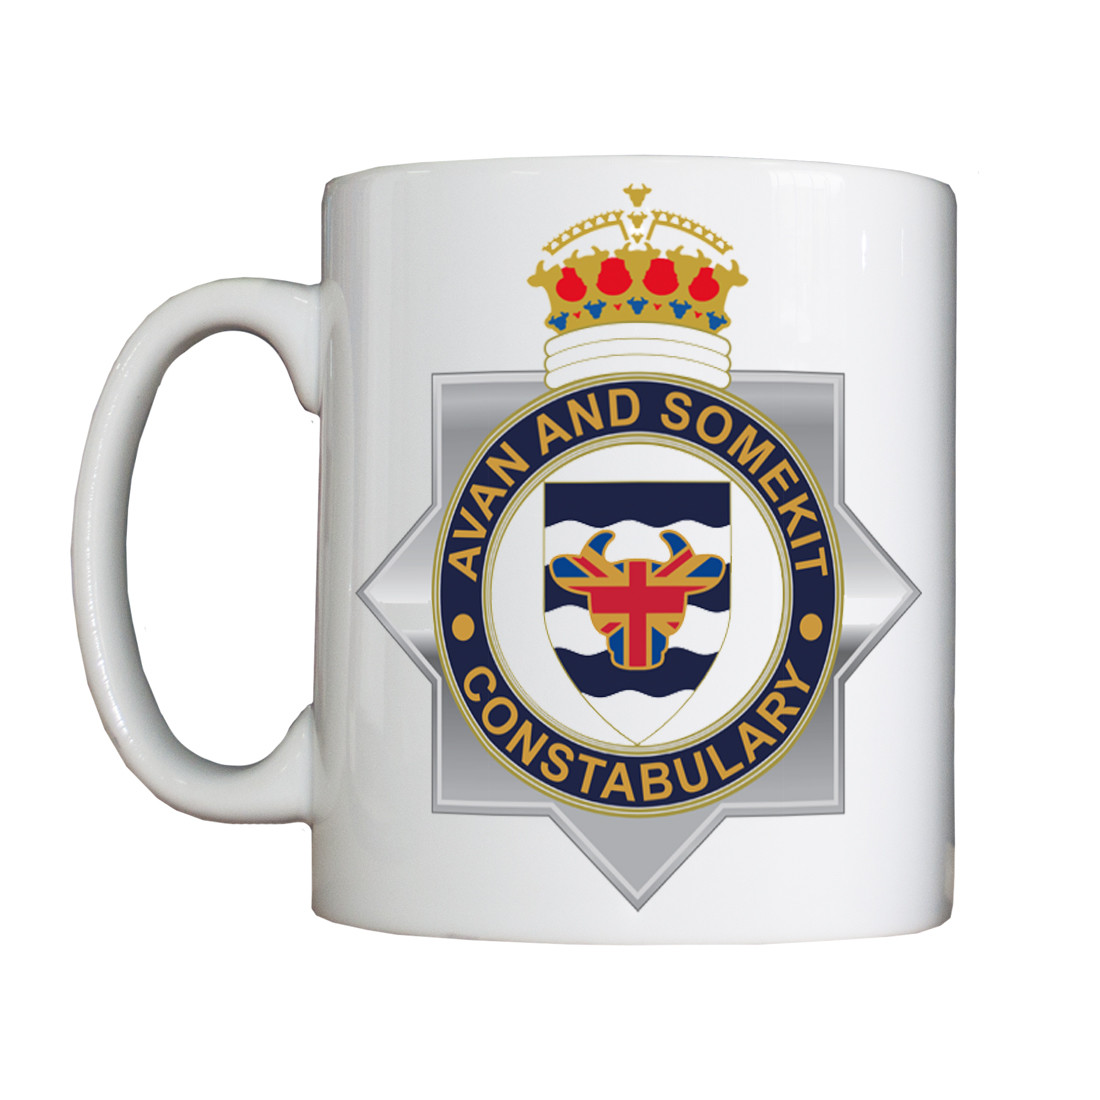 Personalised 'Avan and Somekit' Drinking Vessel (Mug)